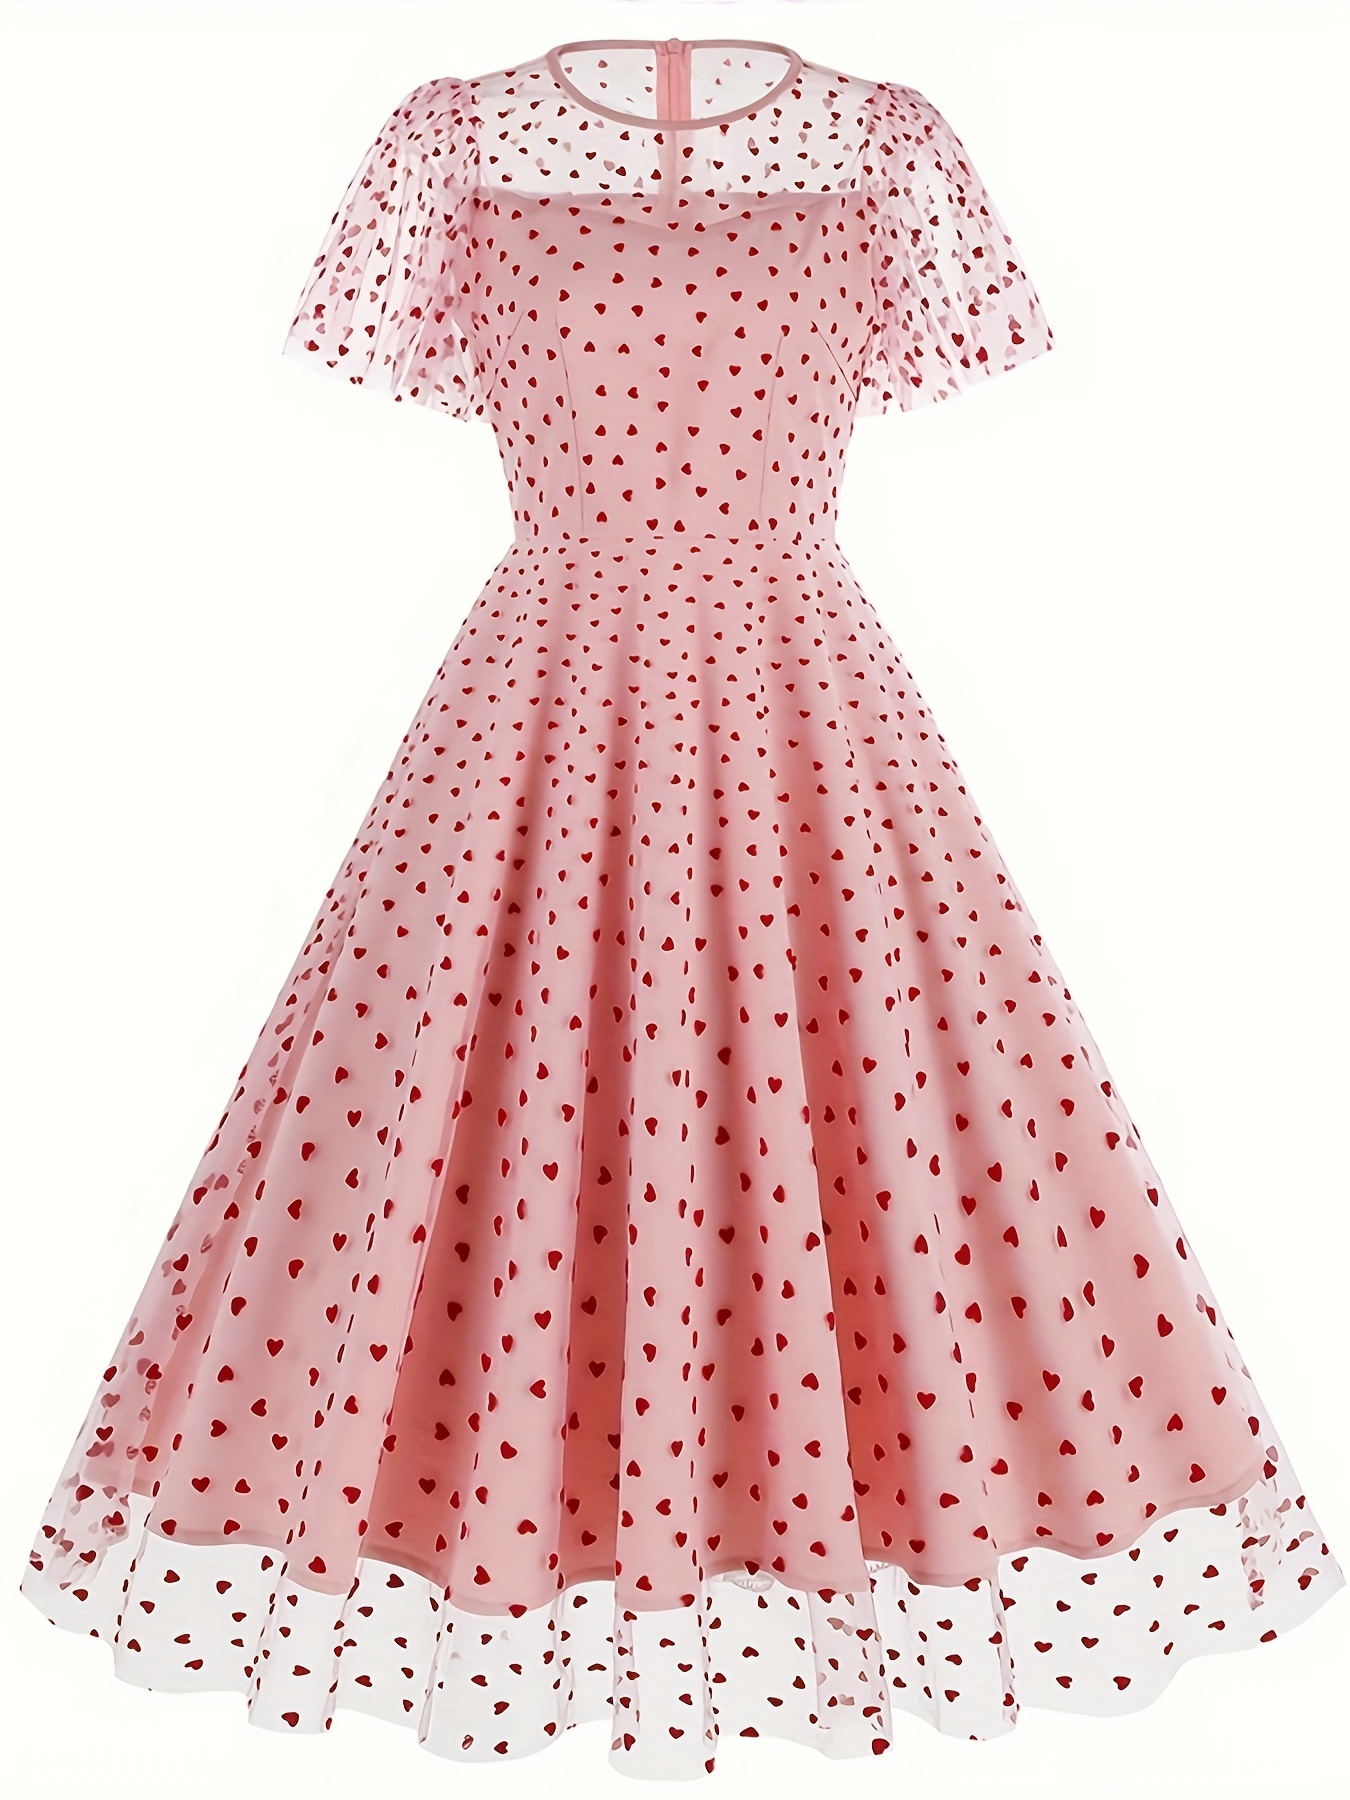 Vintage Pink Dress & Undergarments W/ White Polka Dots & Lace Trim